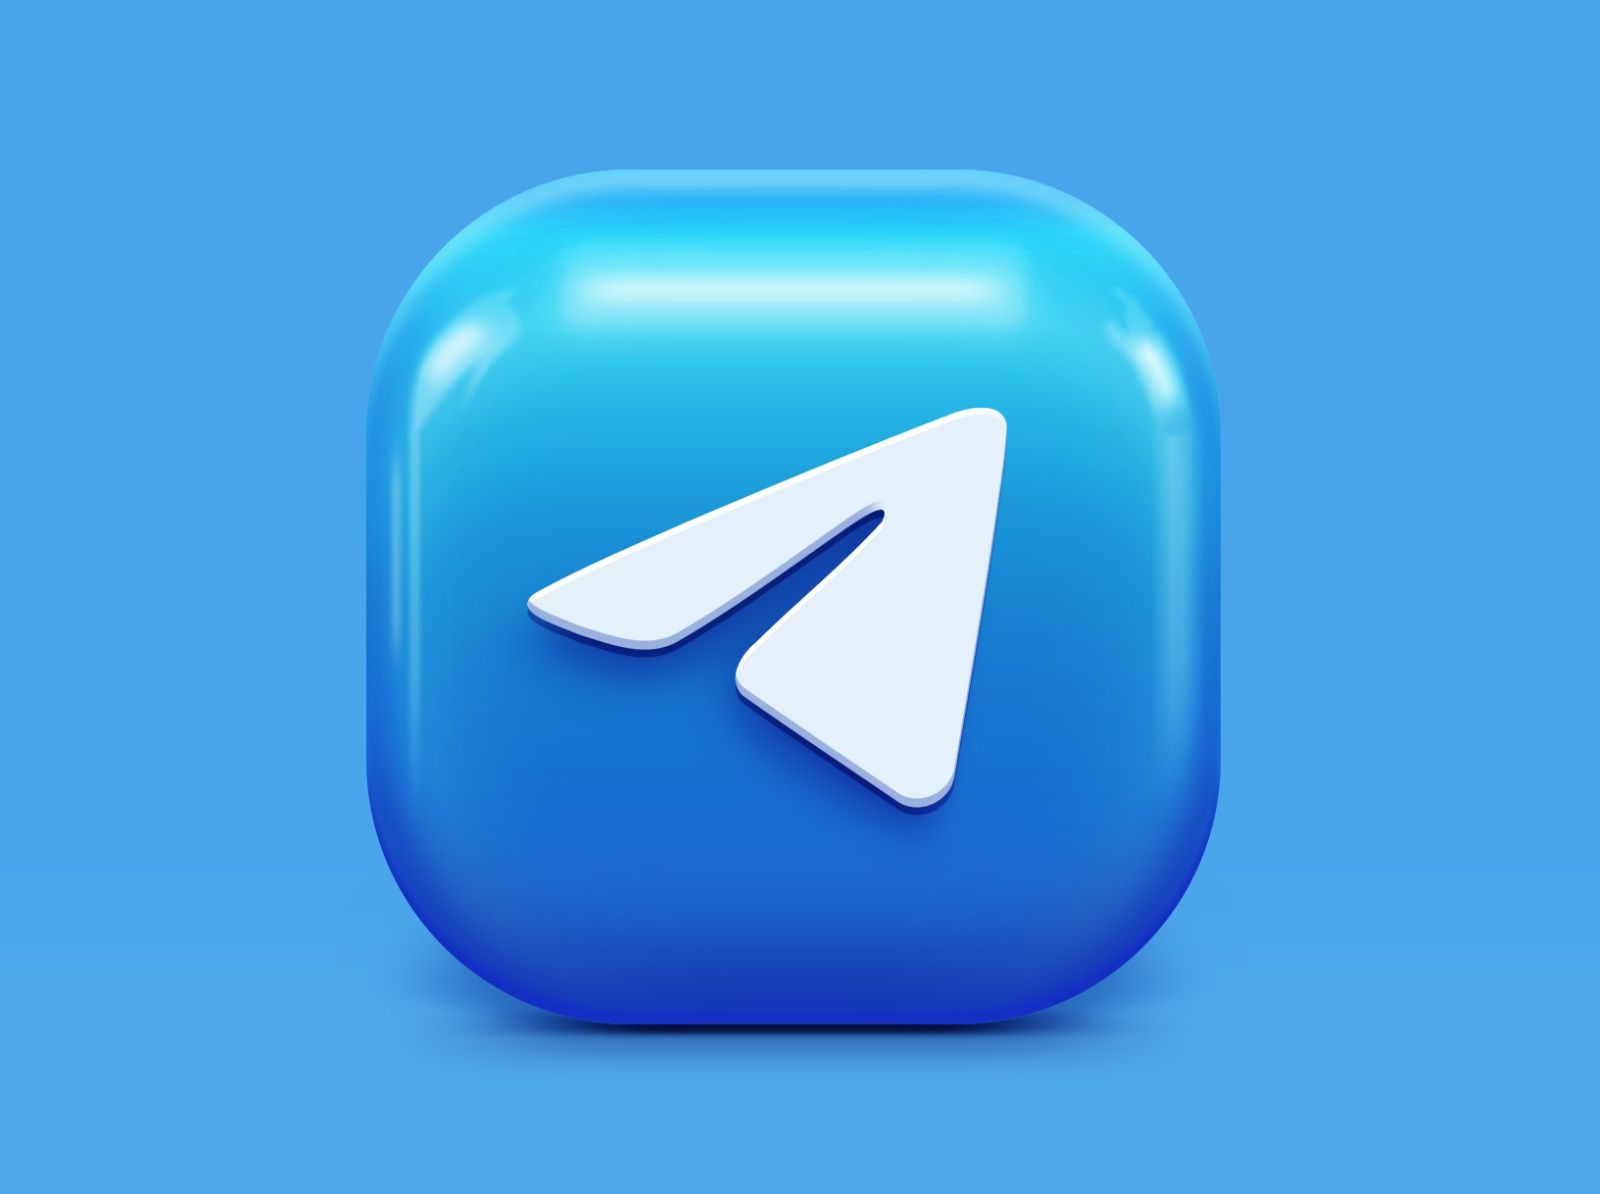 icon telegram. Mobile app design inspiration, App design inspiration, App icon design